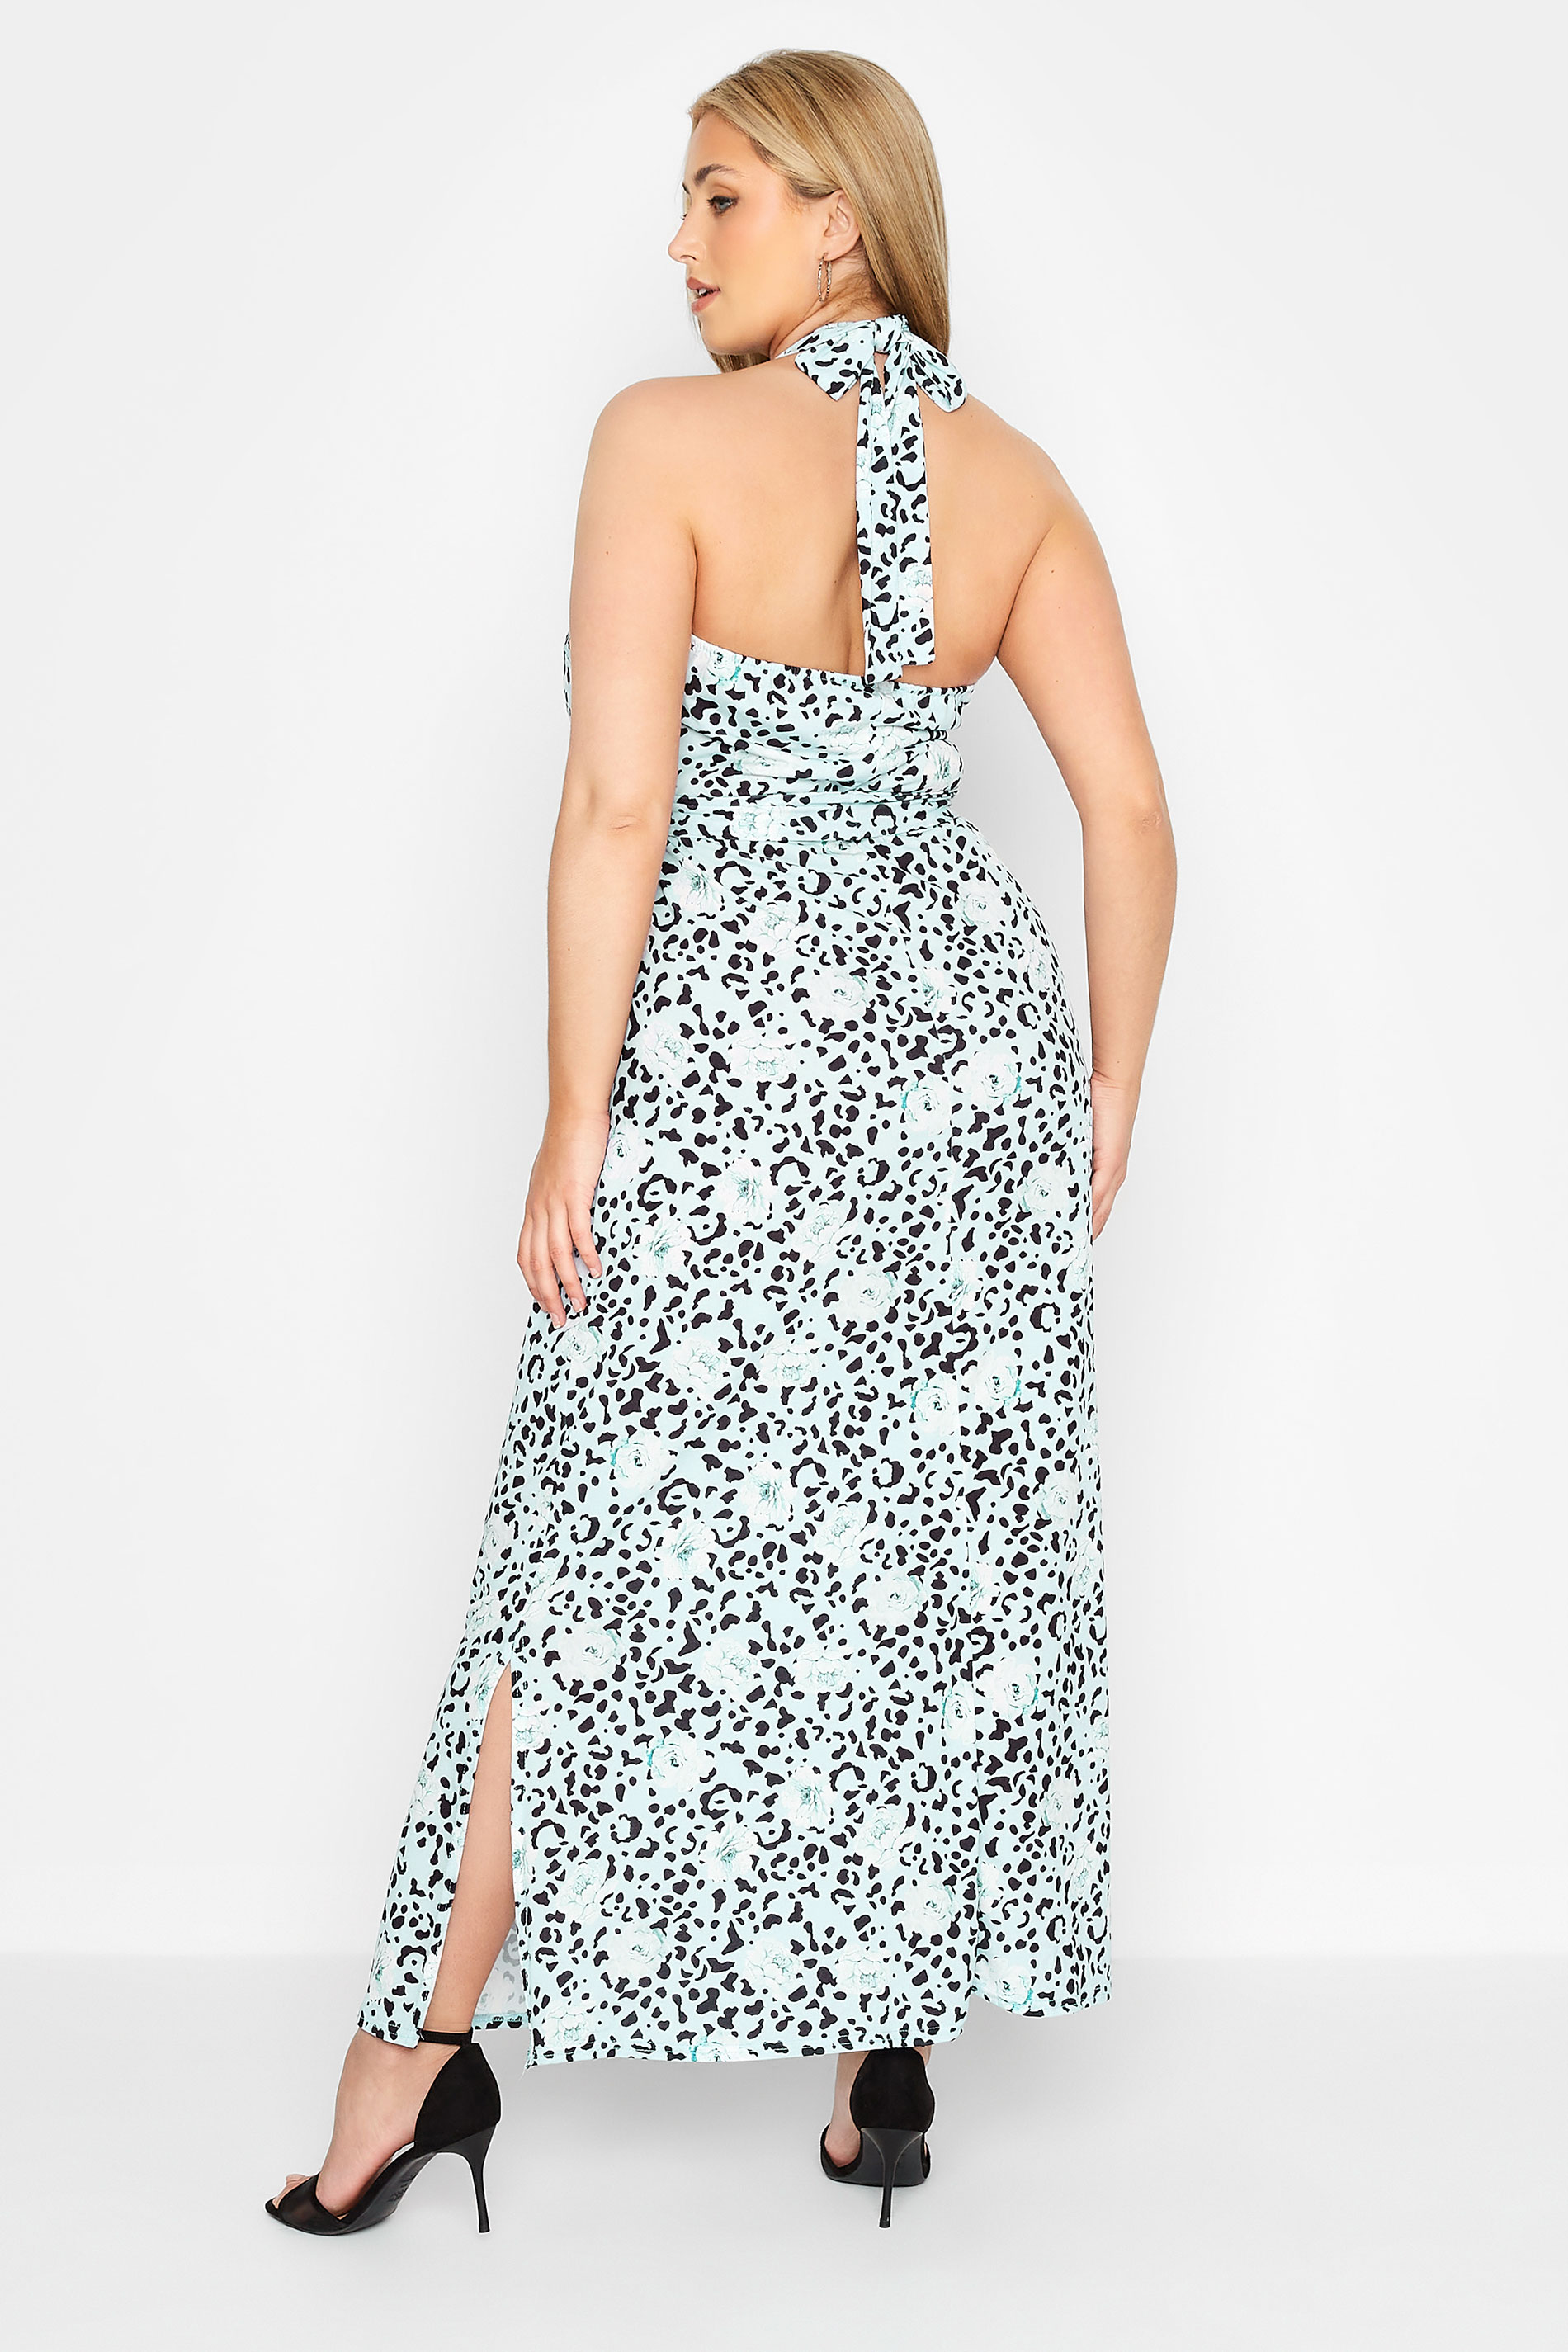 YOURS LONDON Plus Size Blue Leopard Print Halter Neck Maxi Dress | Yours Clothing  3